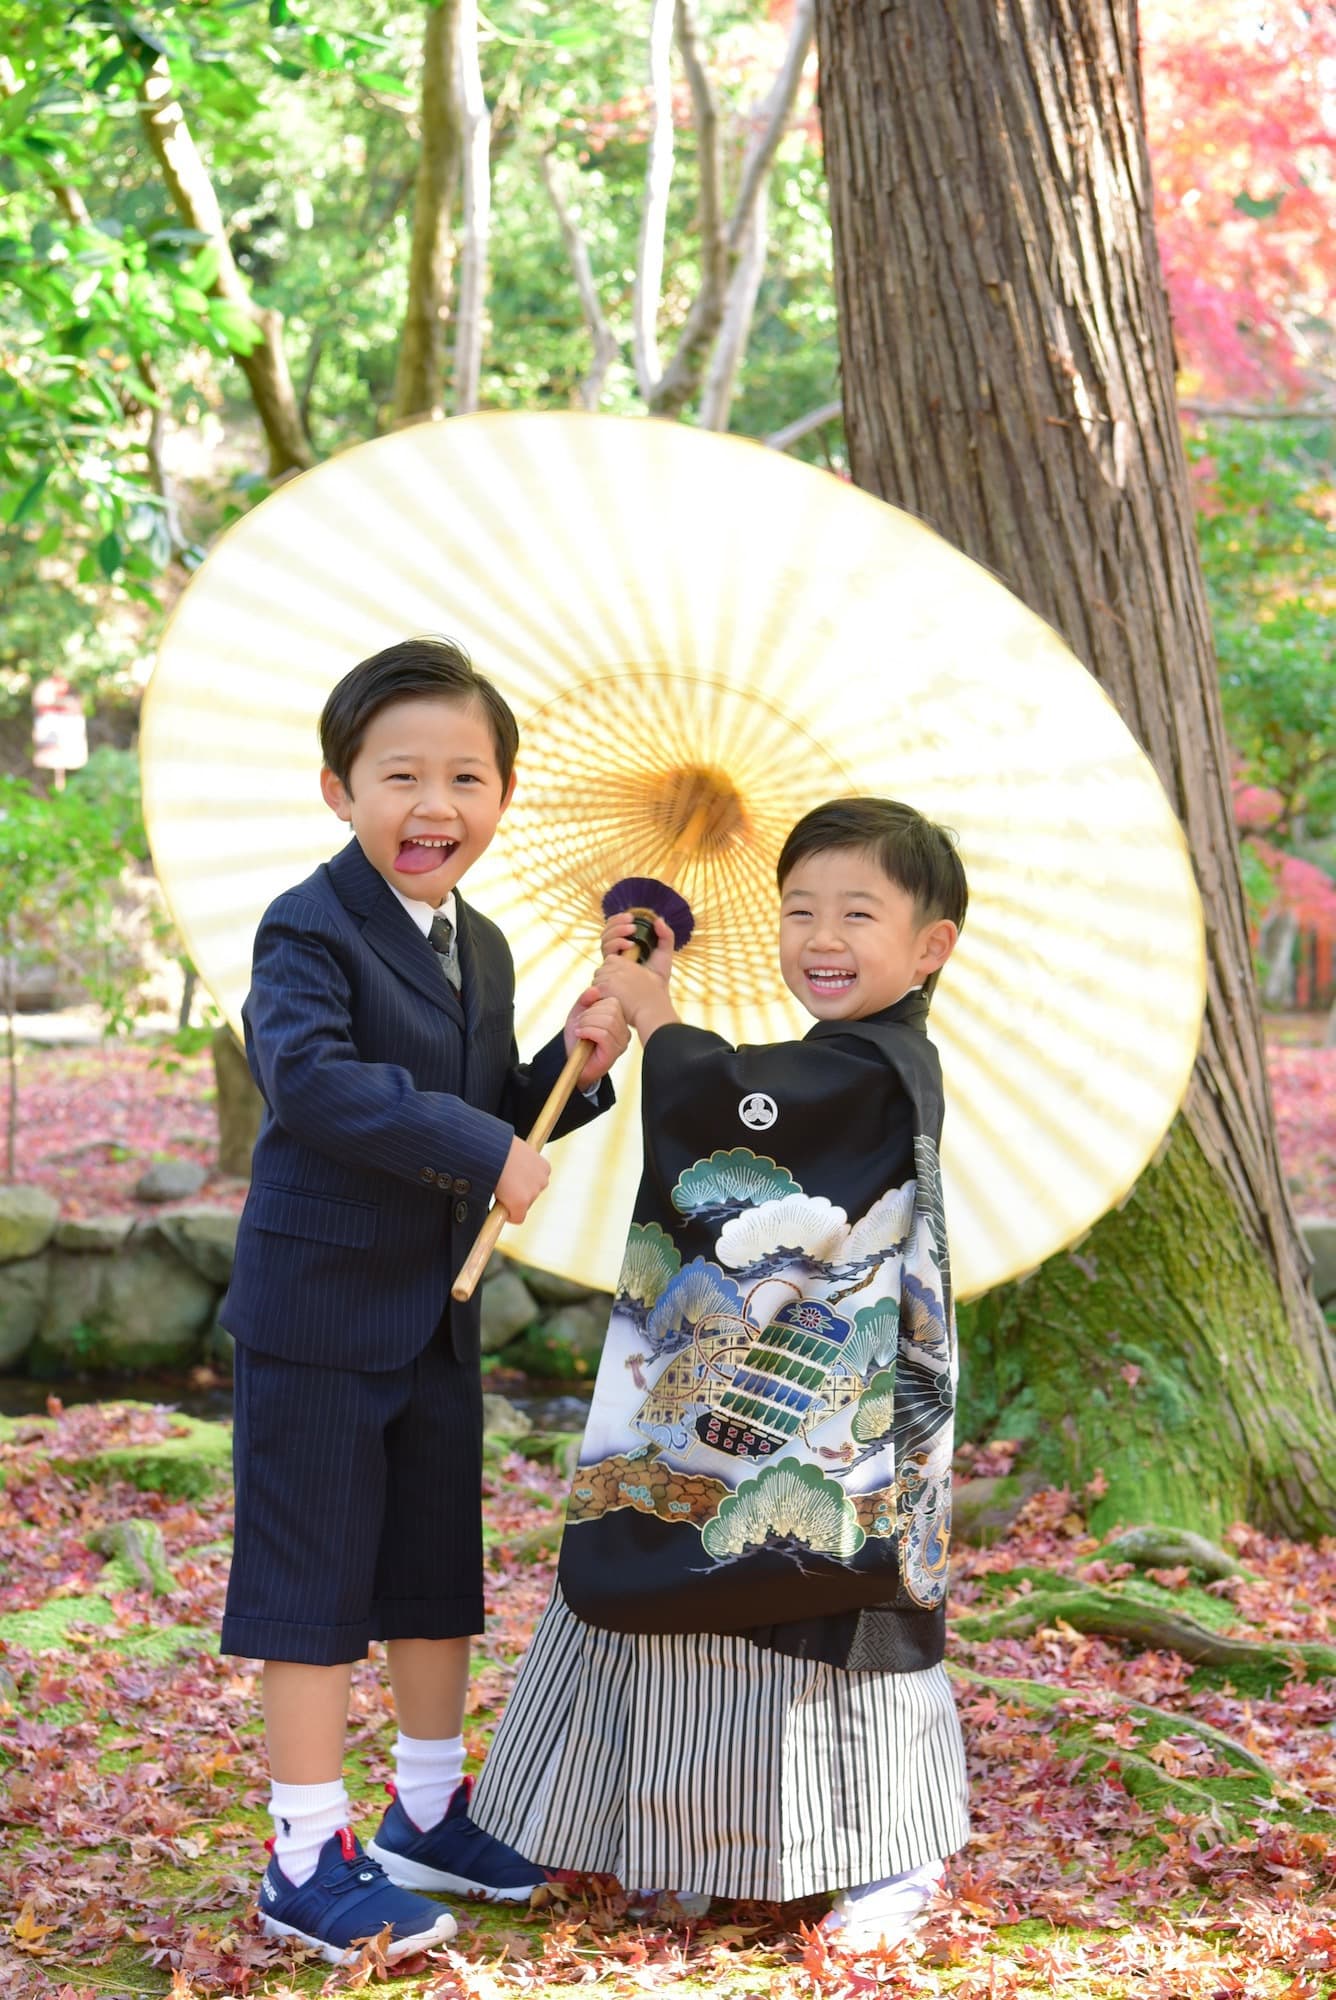 上賀茂神社で七五三の記念写真